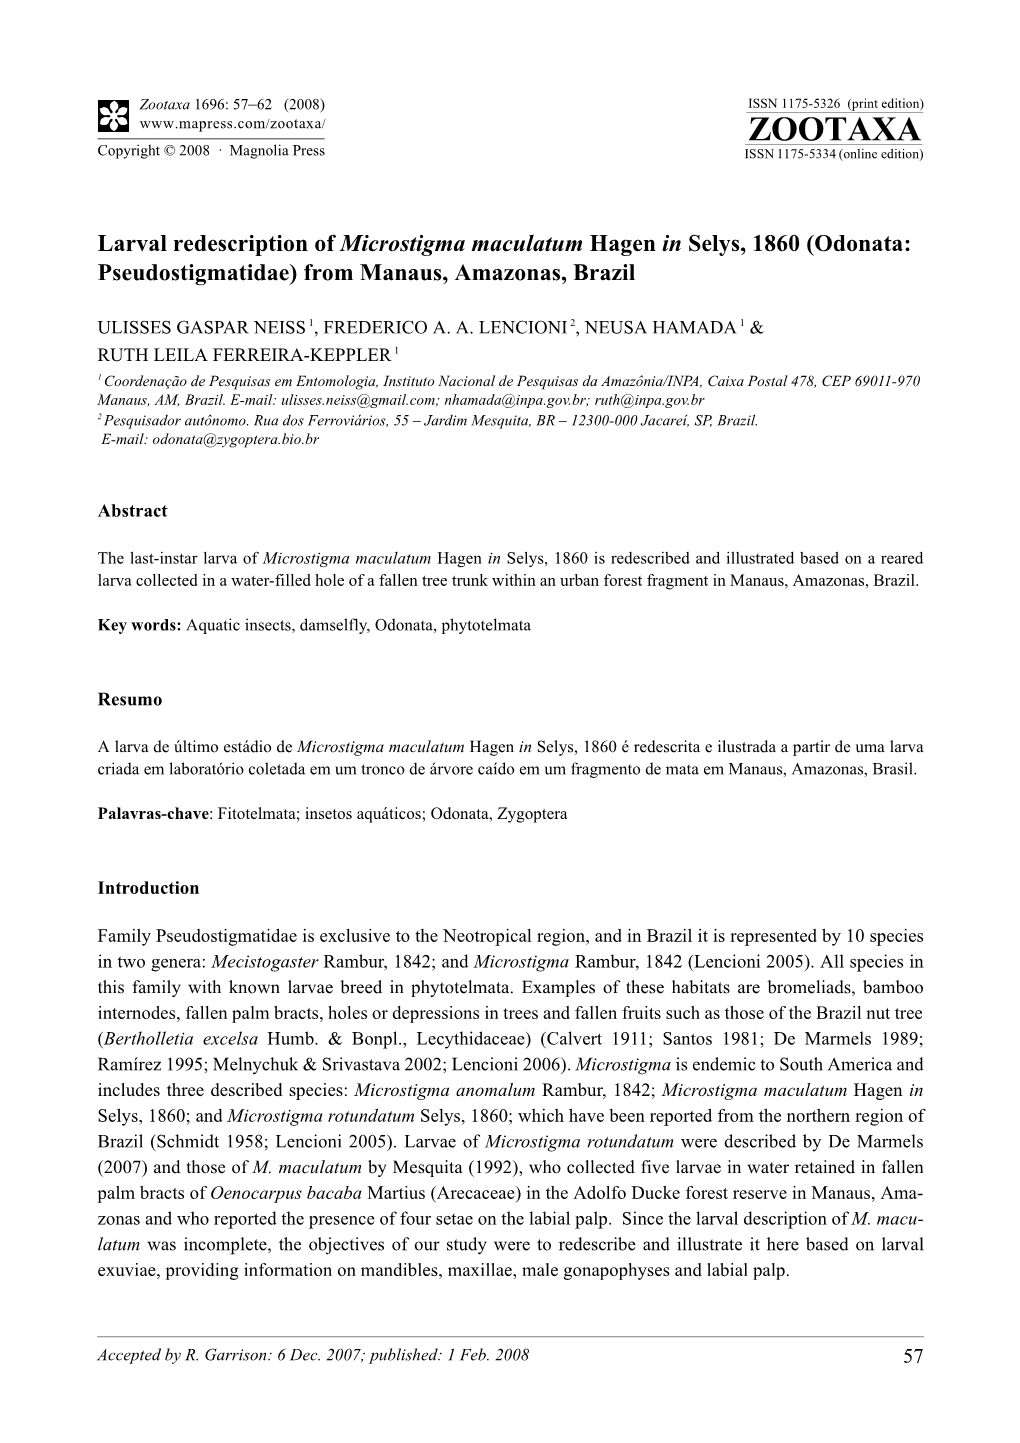 Zootaxa, Larval Redescription of Microstigma